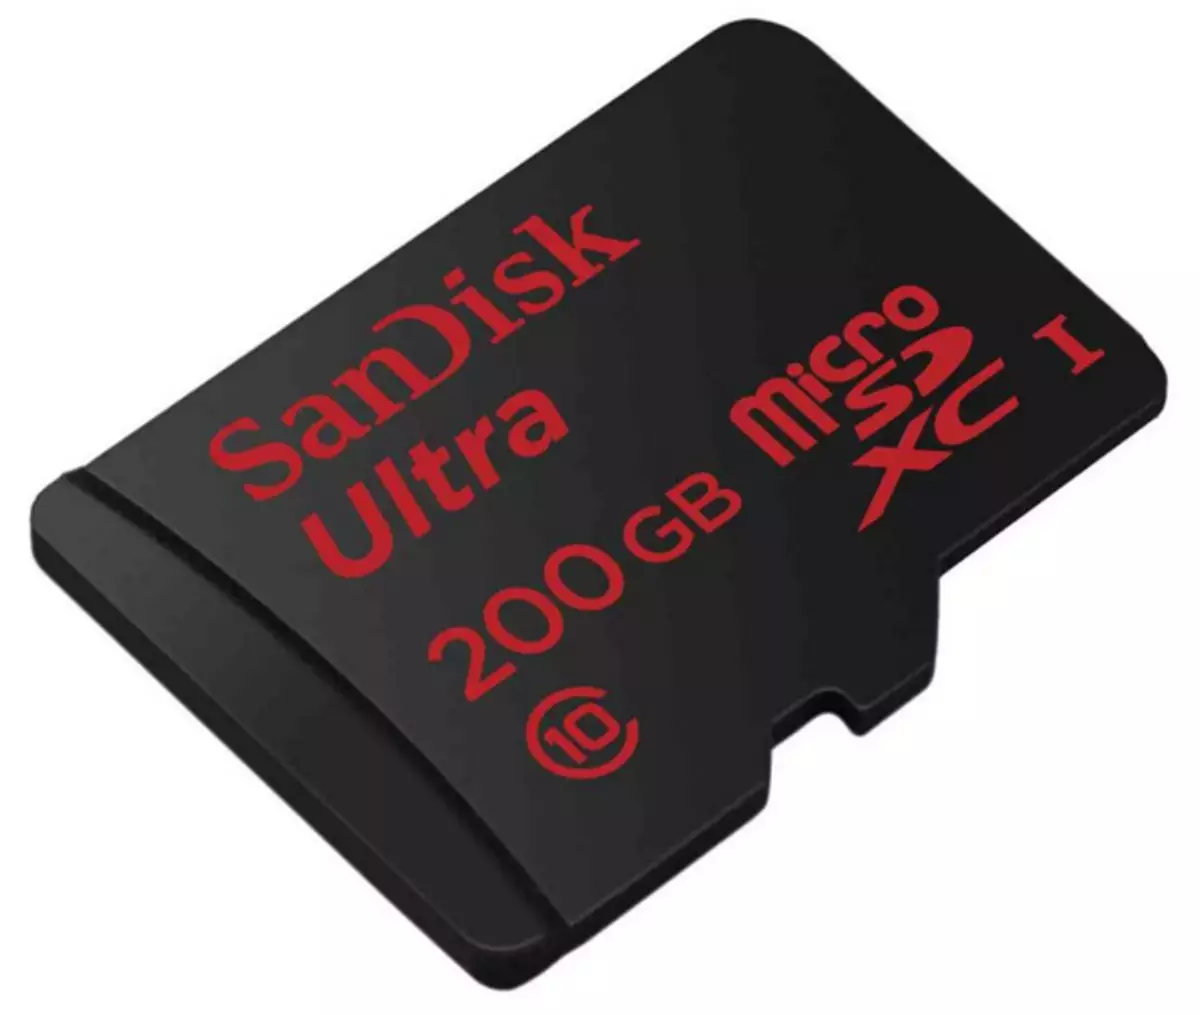 Microsd Ohatra flash drive